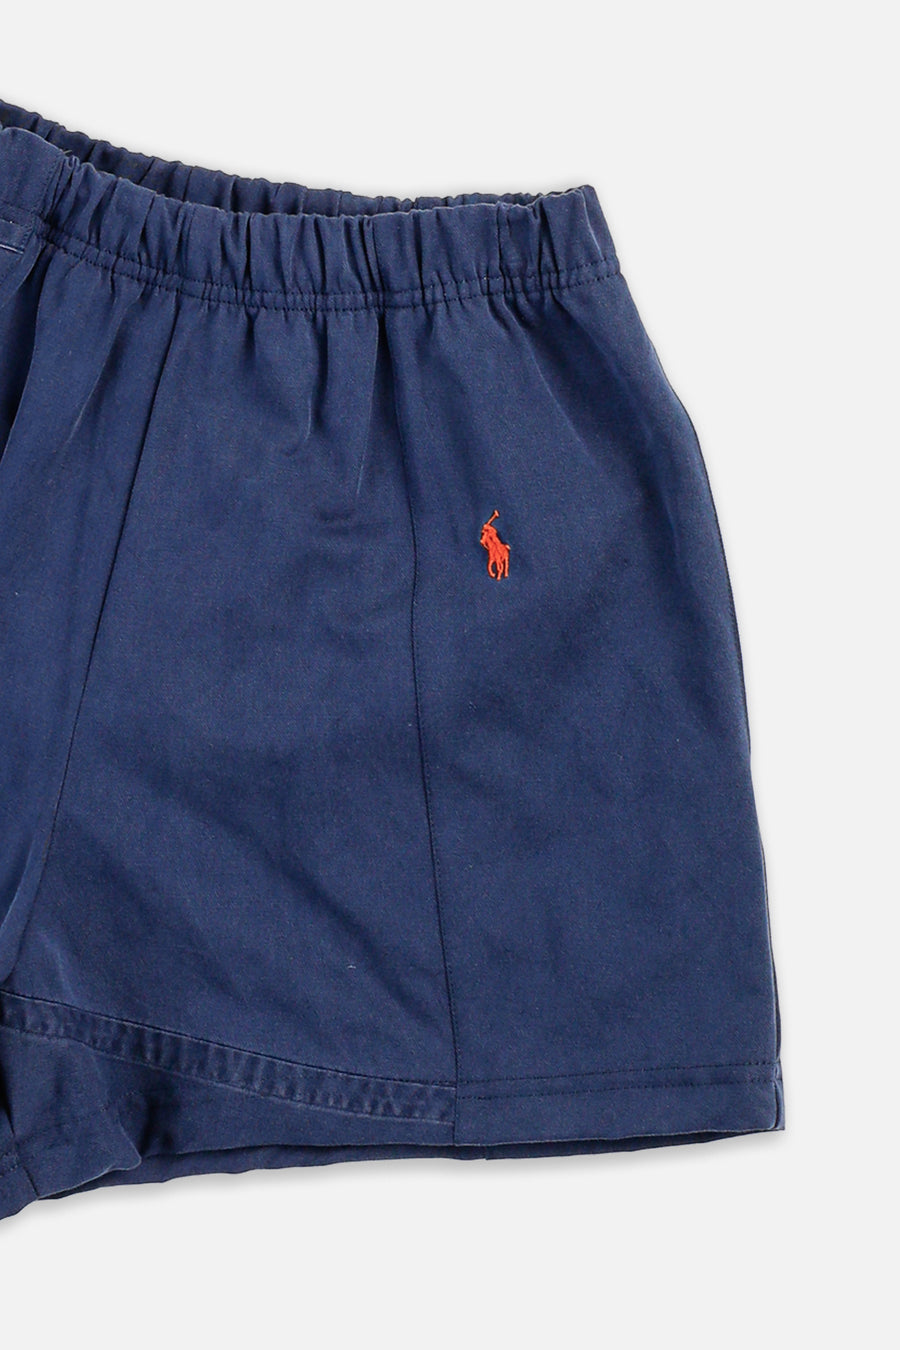 Rework Oxford Mini Boxer Shorts - S